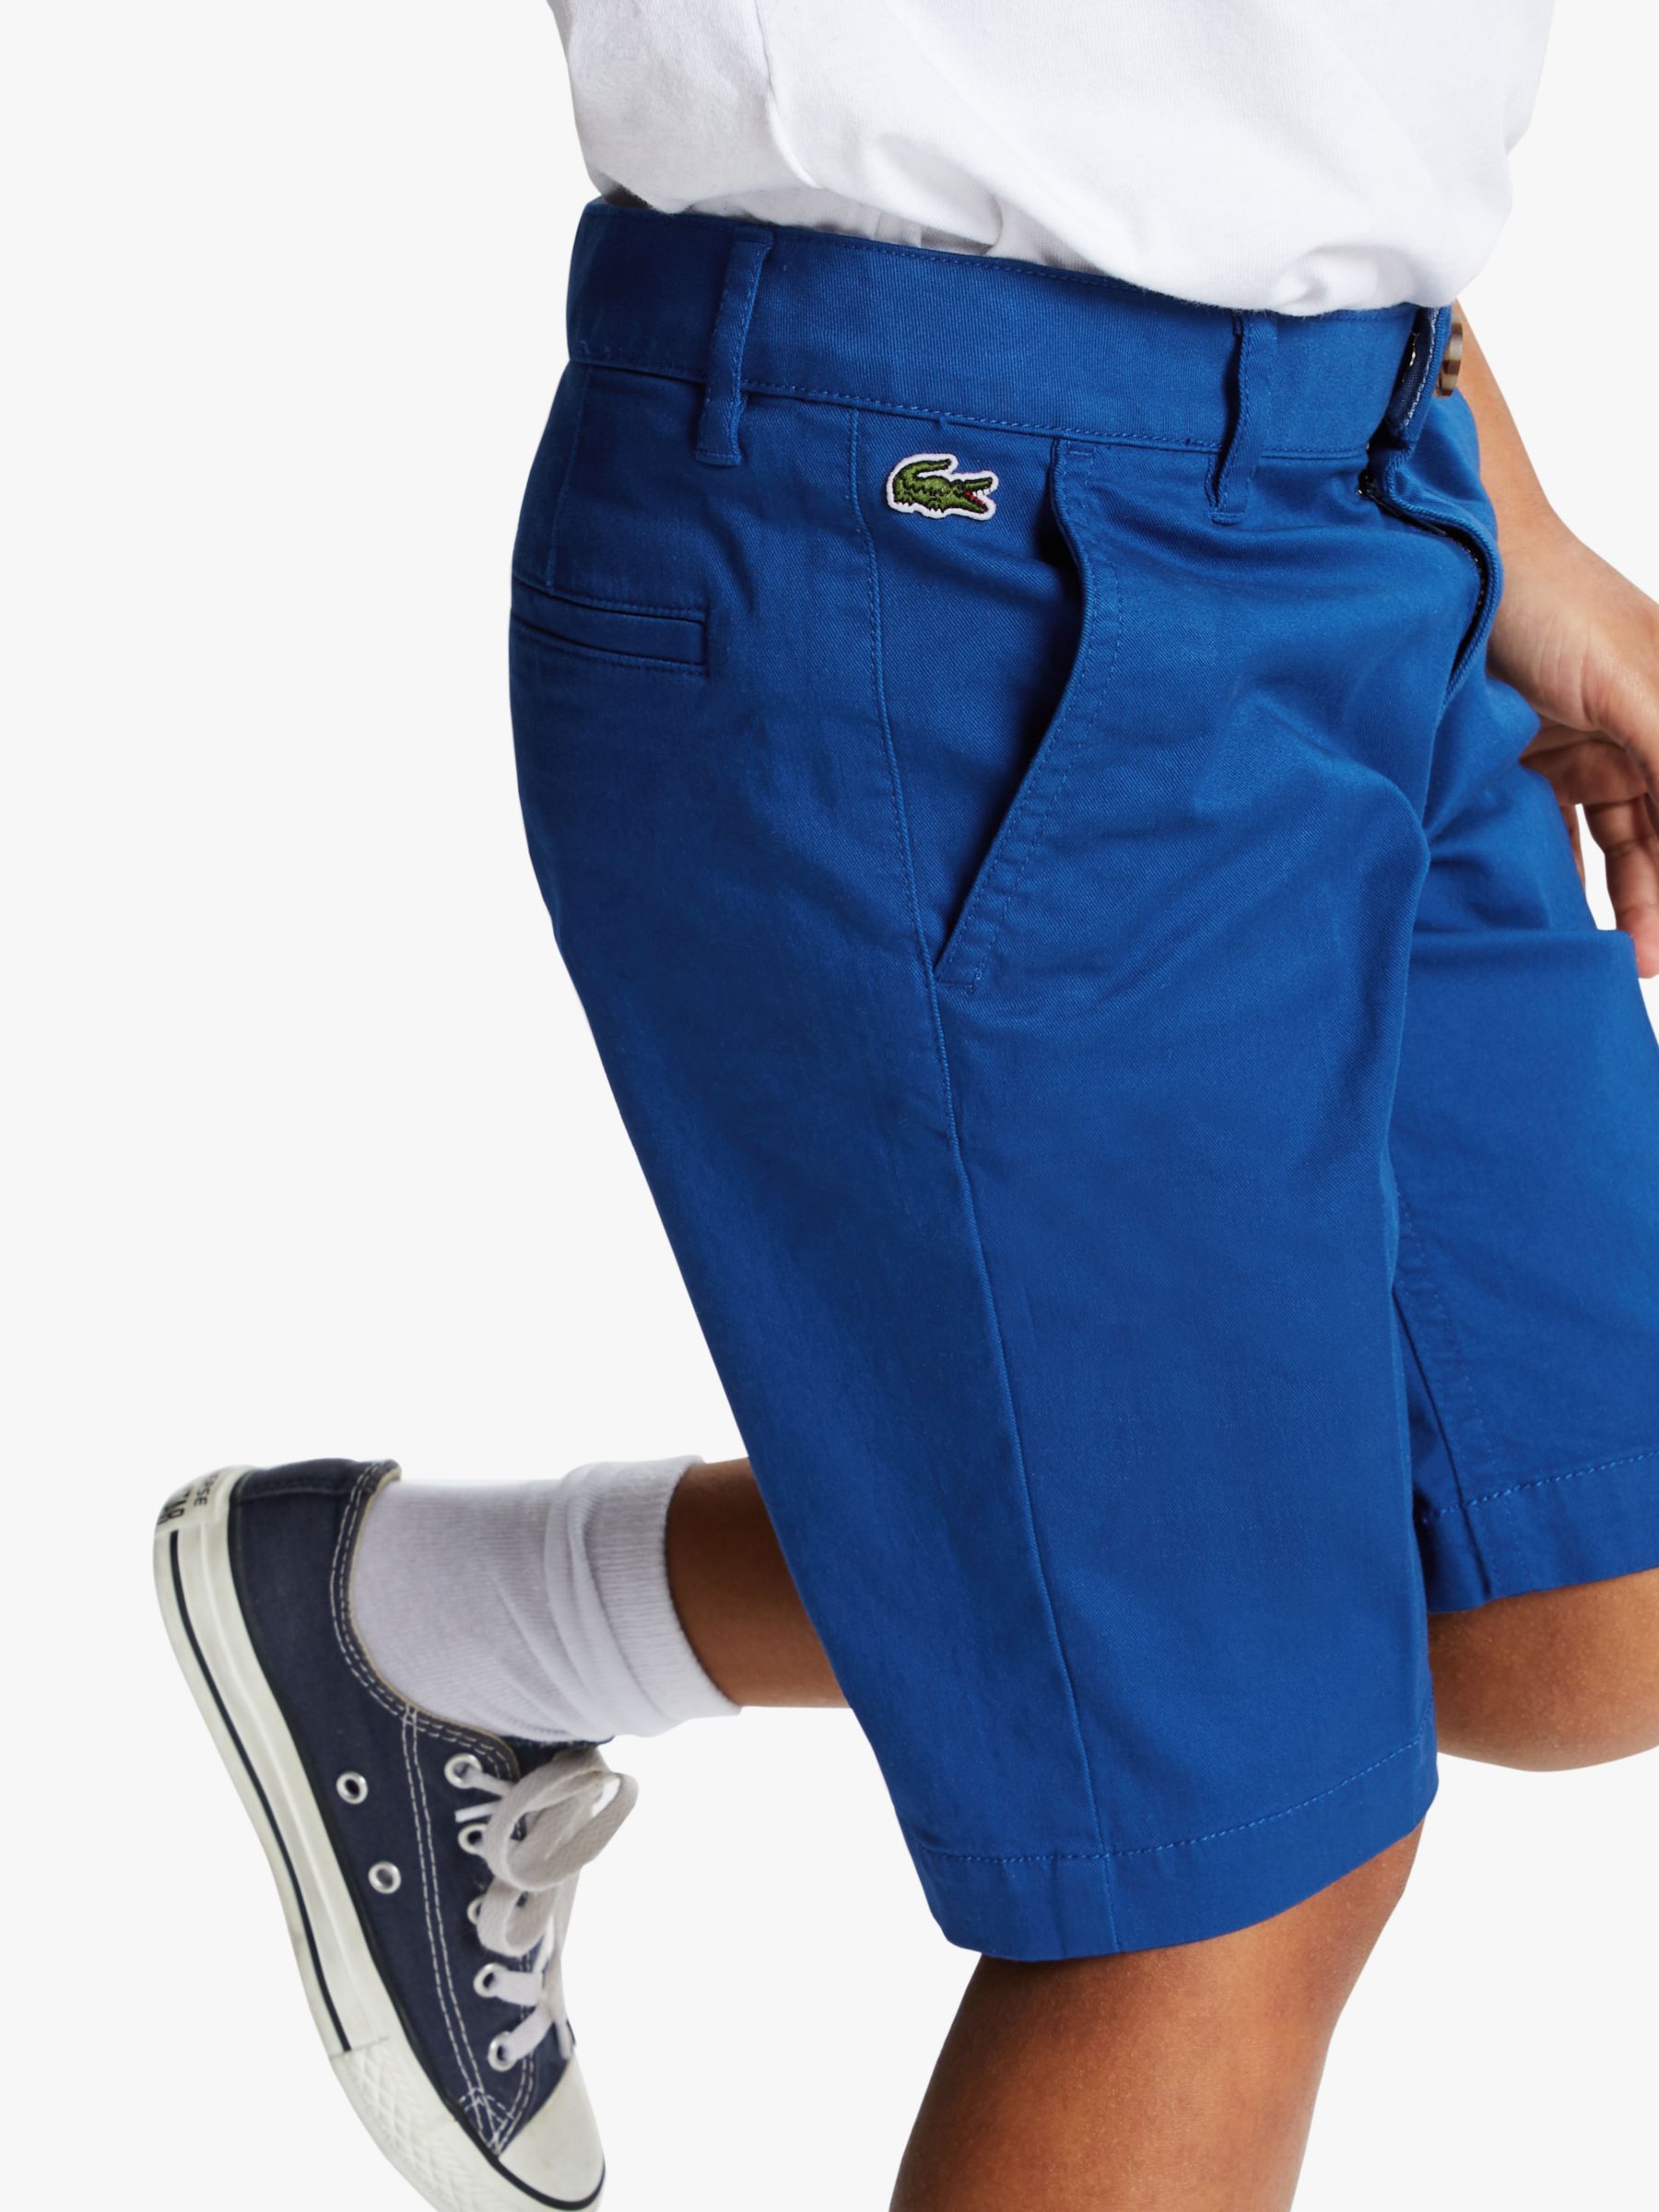 lacoste shorts blue